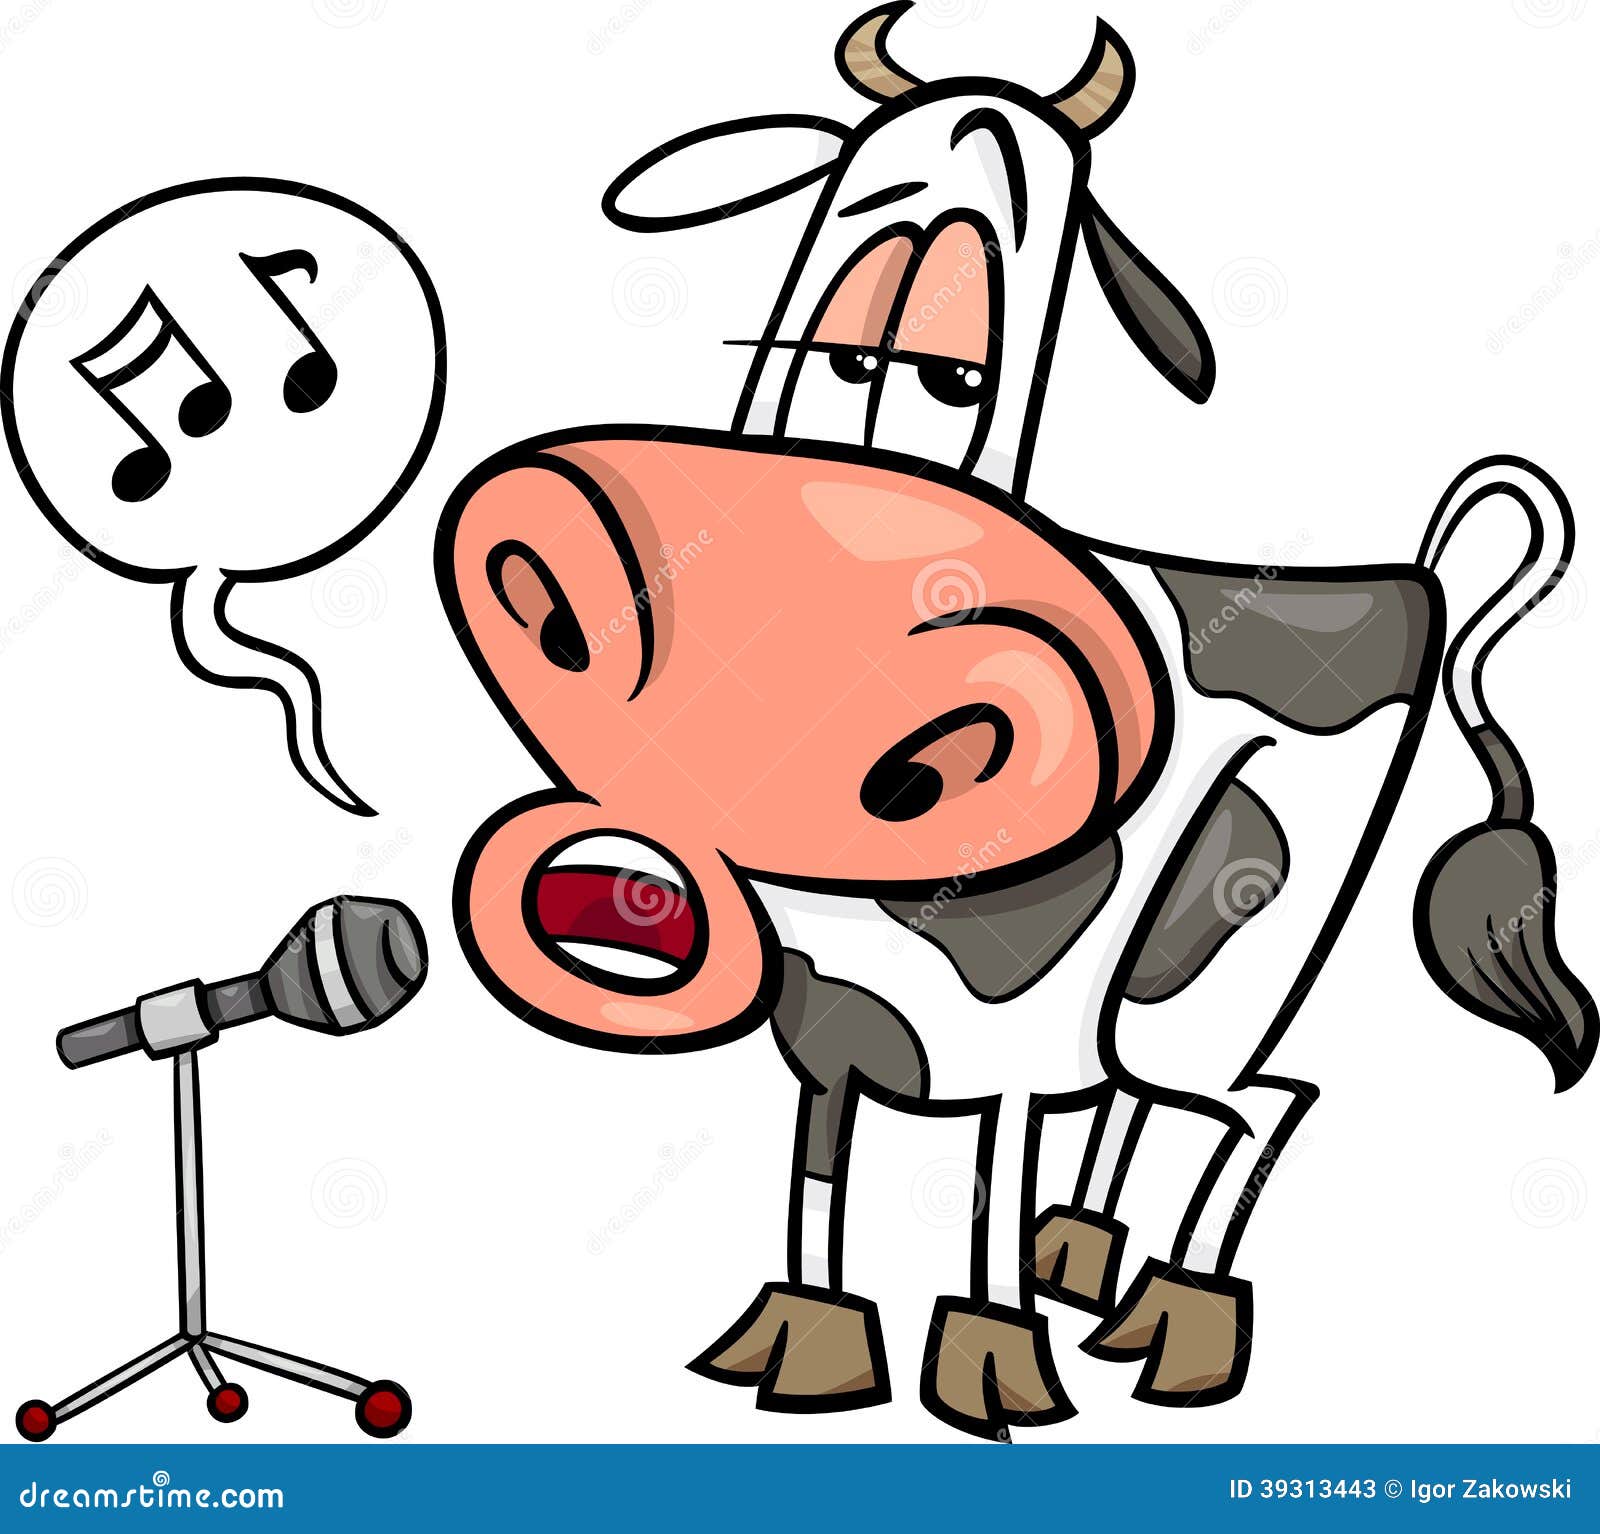 Singing Cow Cartoon Illustration Stock Vector - Illustration of artist,  graphic: 39313443